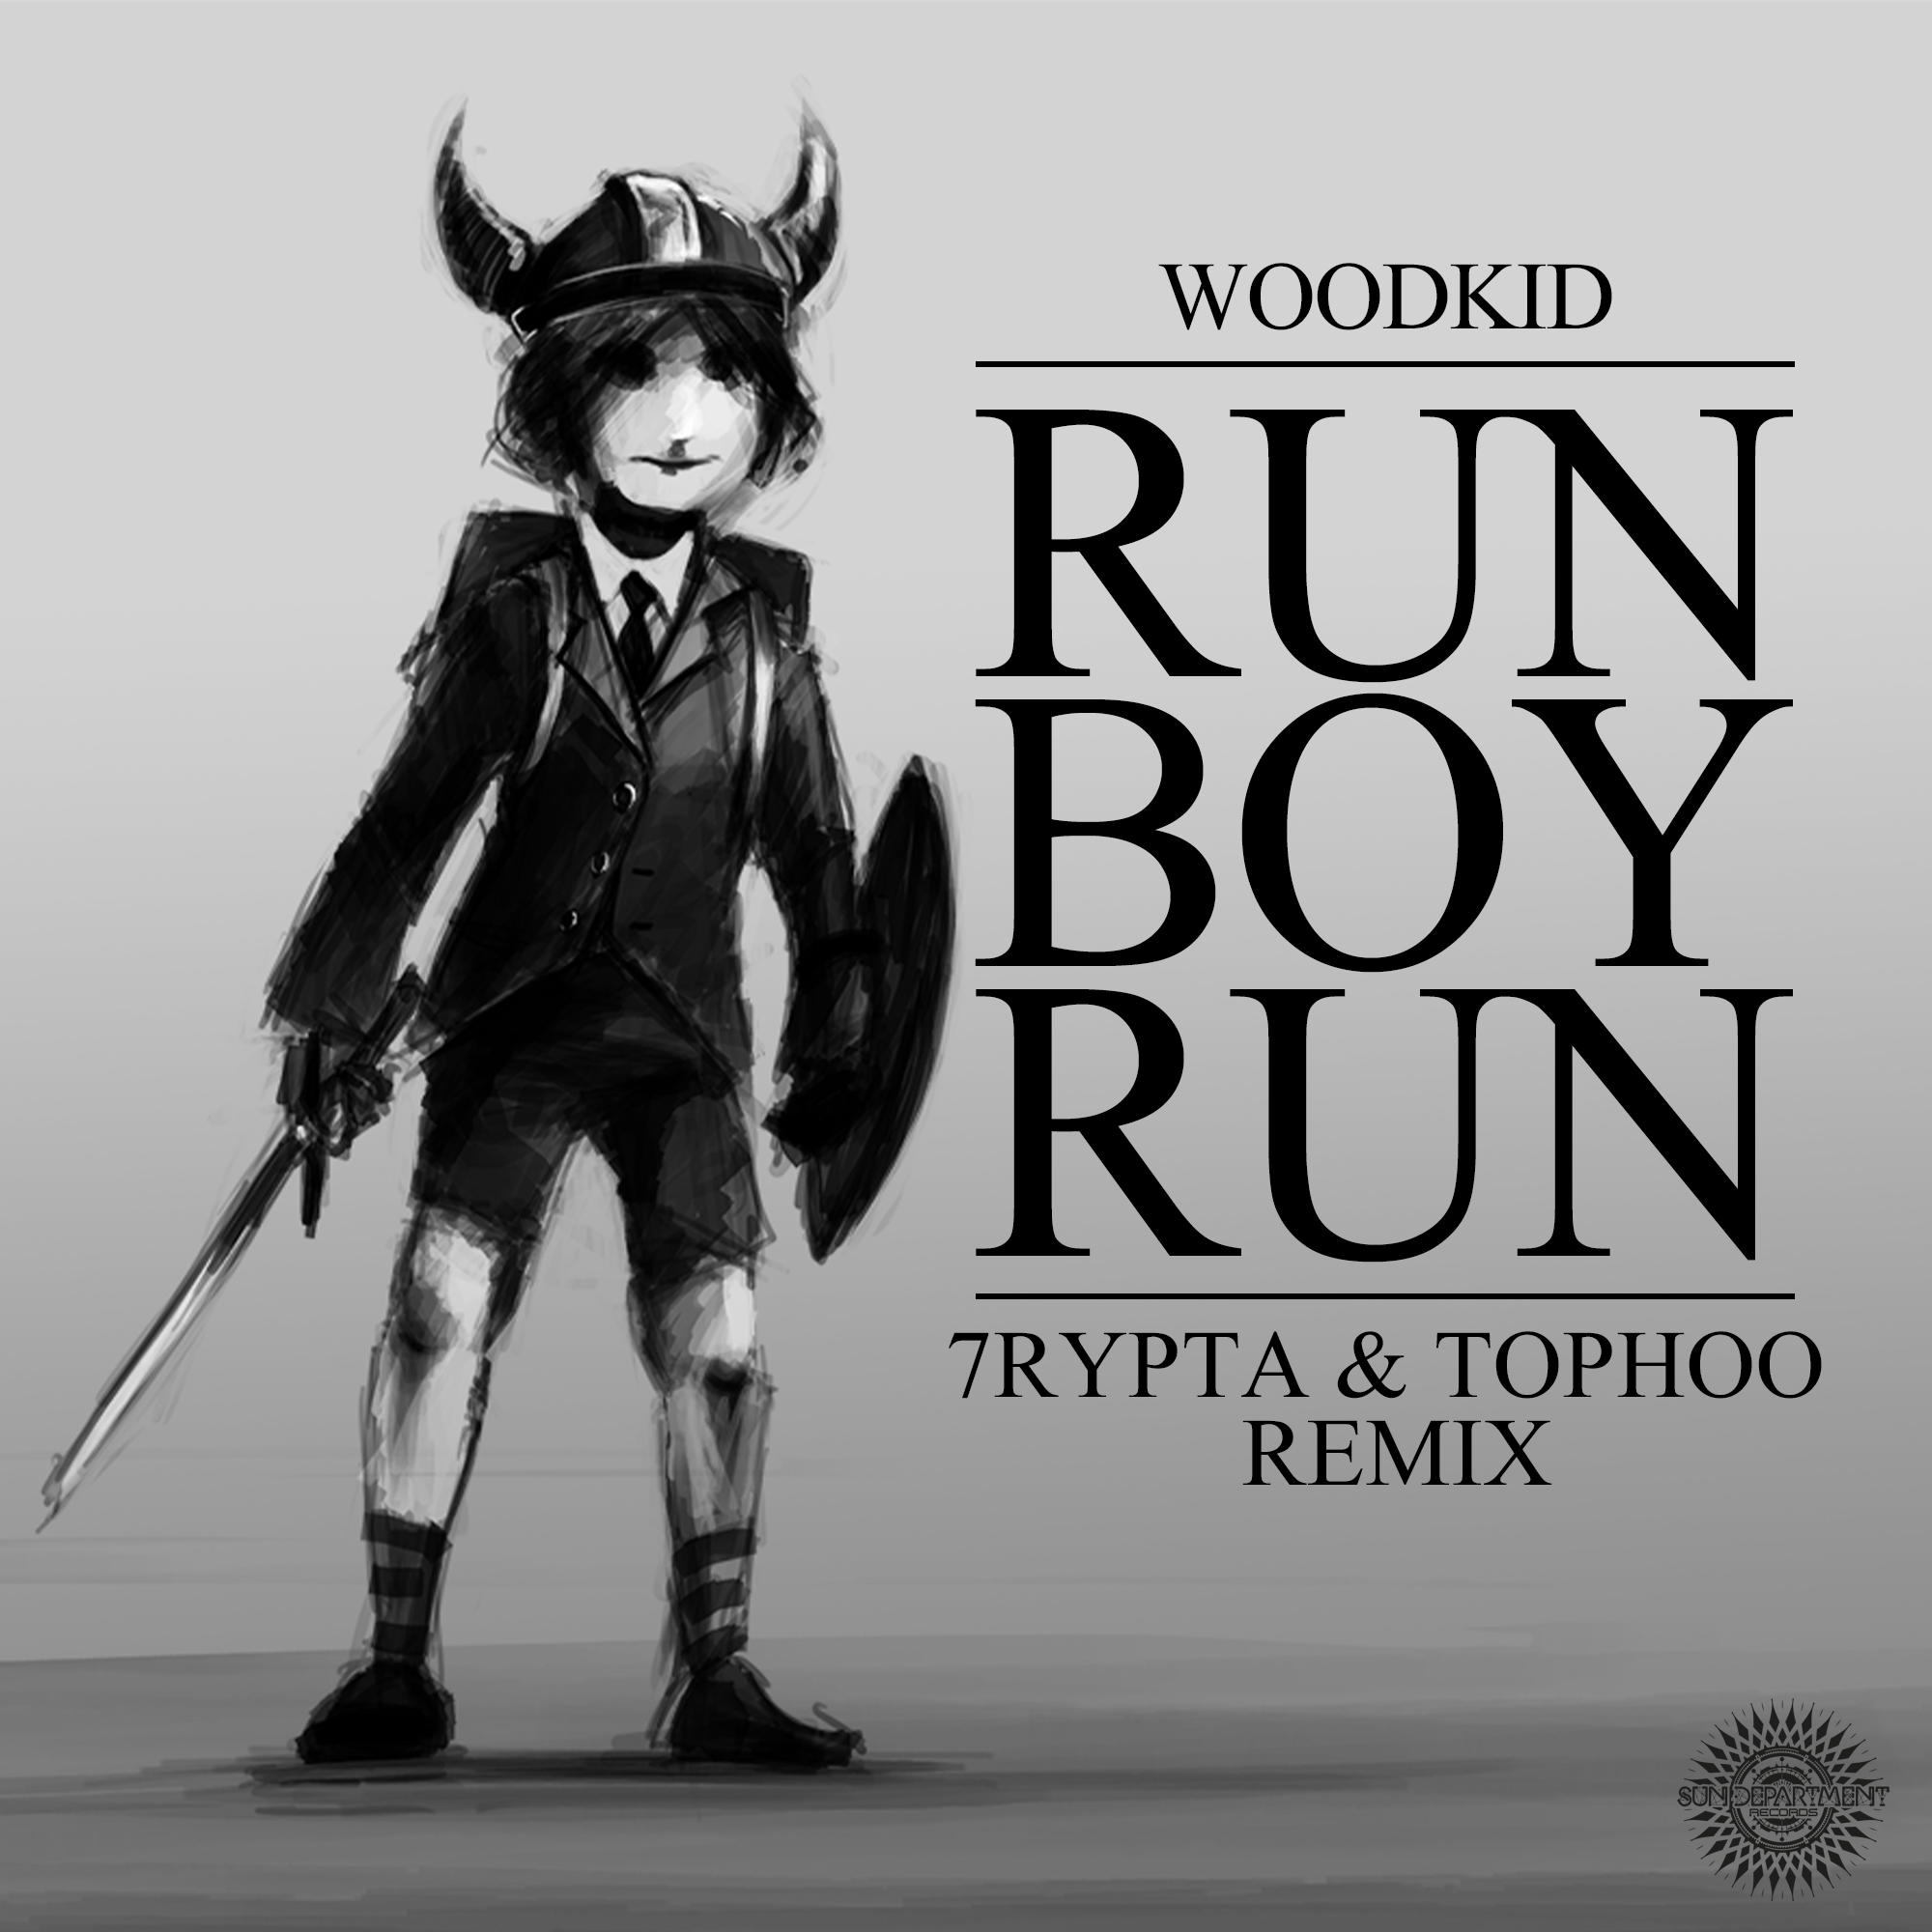 Woodkid - Run Boy Run (7Rypta & Tophoo Remix)